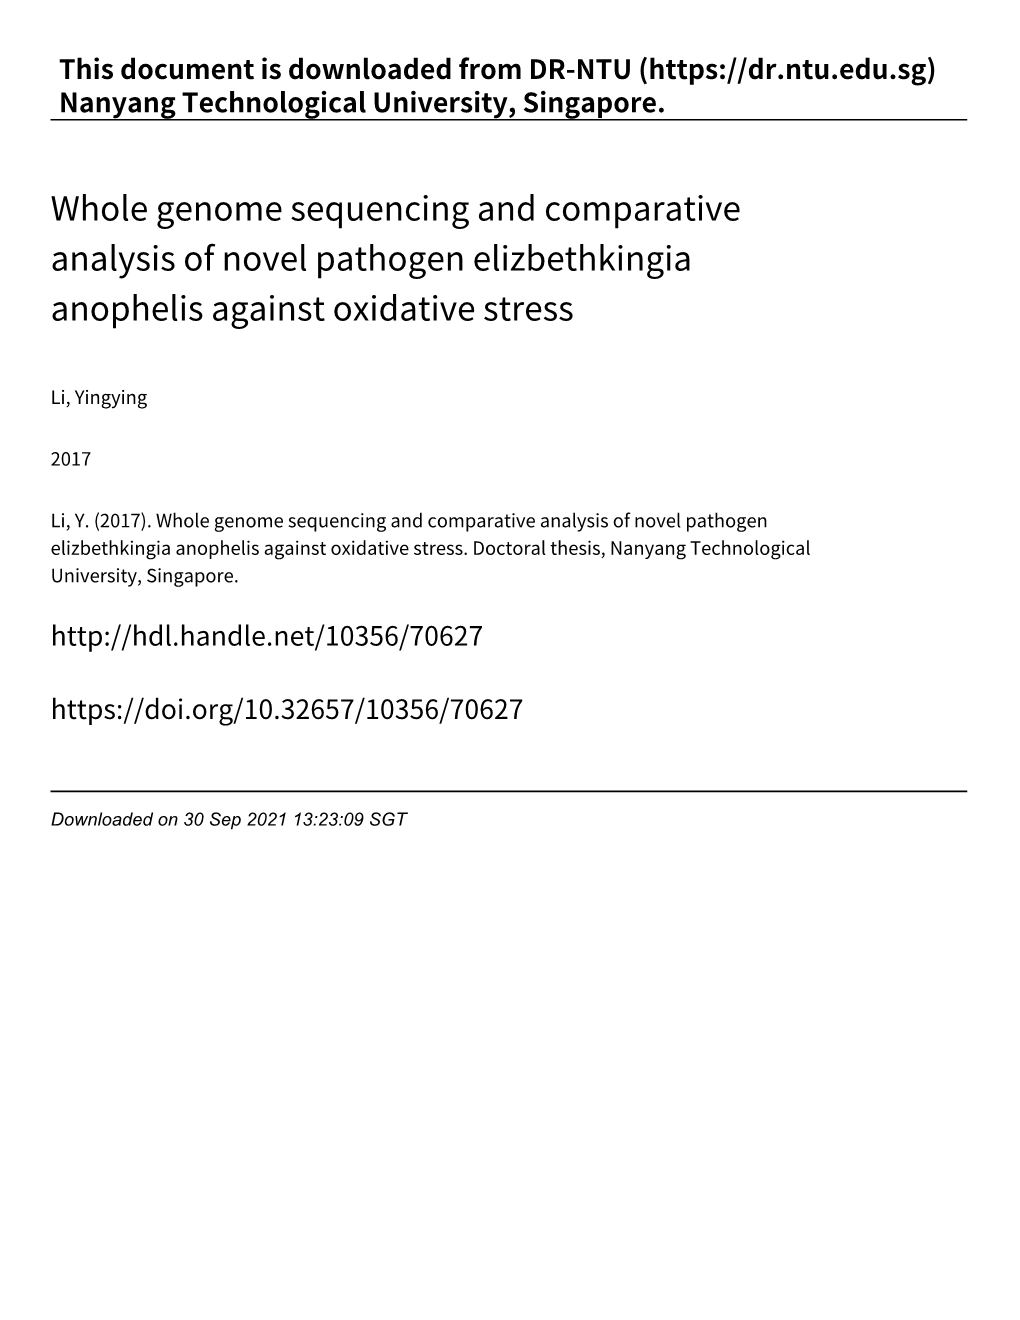 Whole Genome Sequencing and Comparative Analysis of Novel Pathogen Elizbethkingia Anophelis Against Oxidative Stress